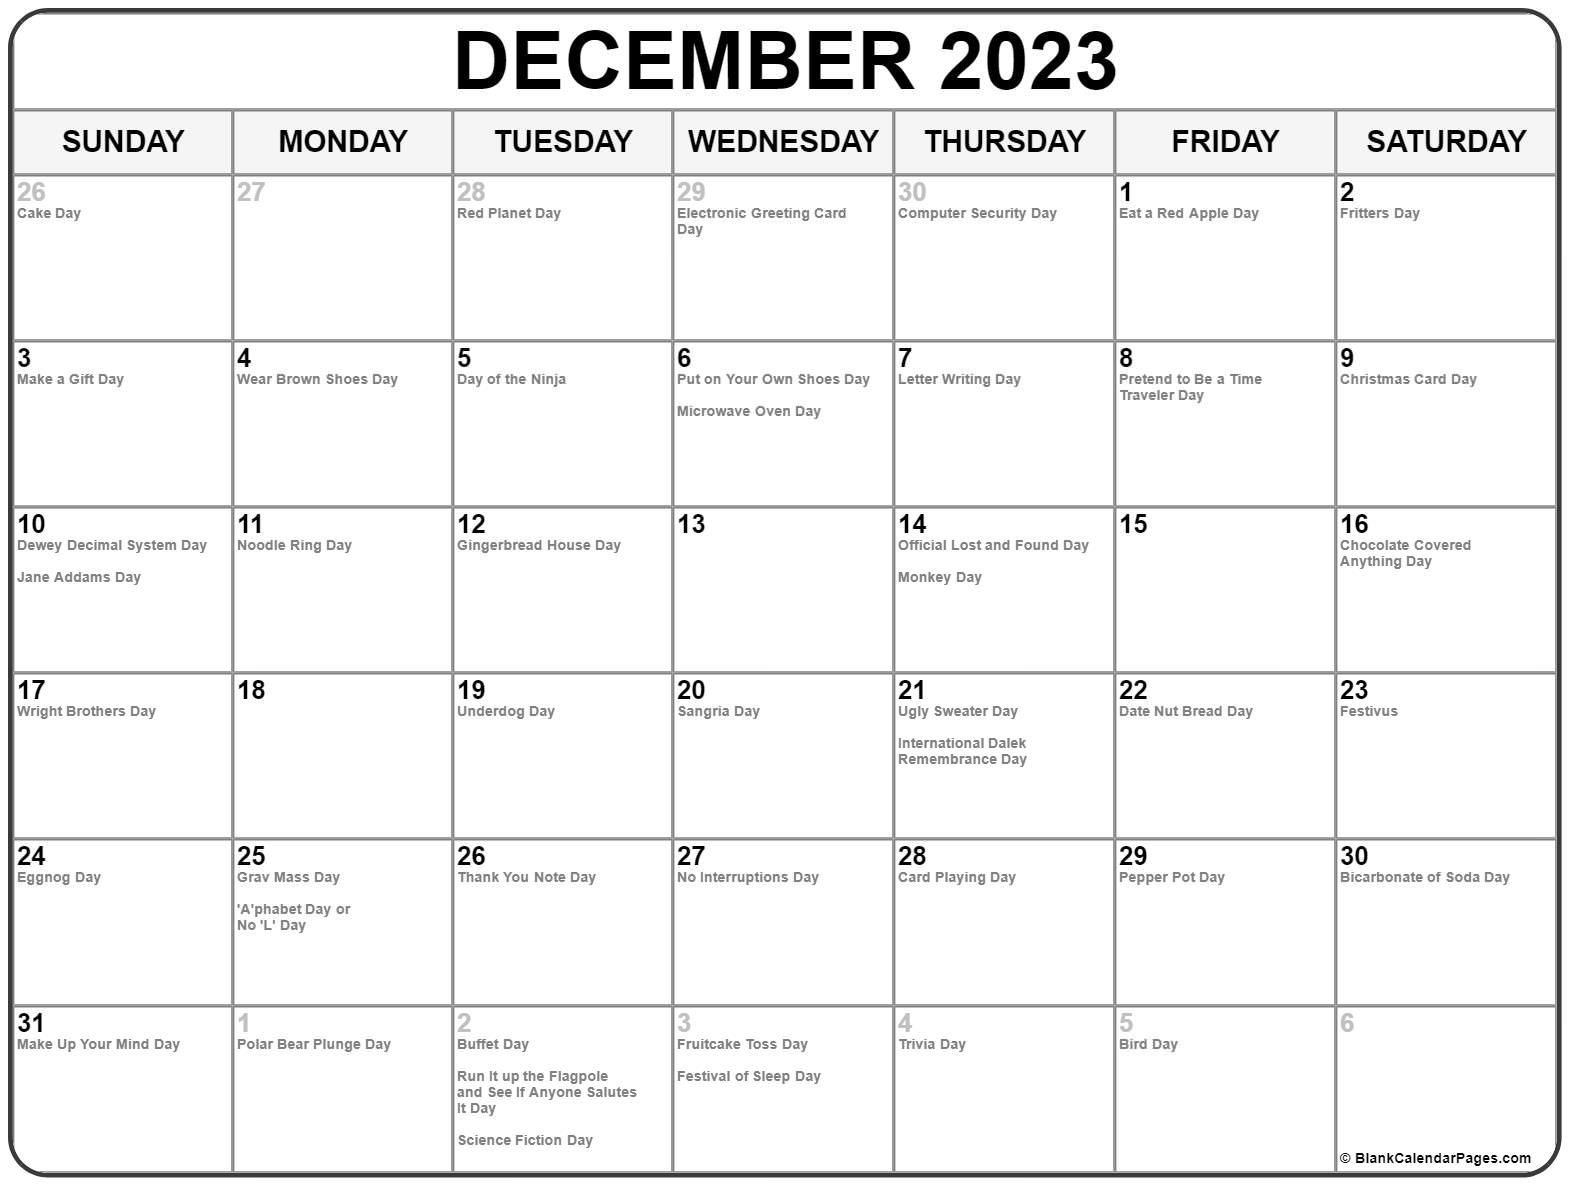 new-2023-calendar-with-government-holidays-ideas-calendar-with-printable-calendar-2023-one